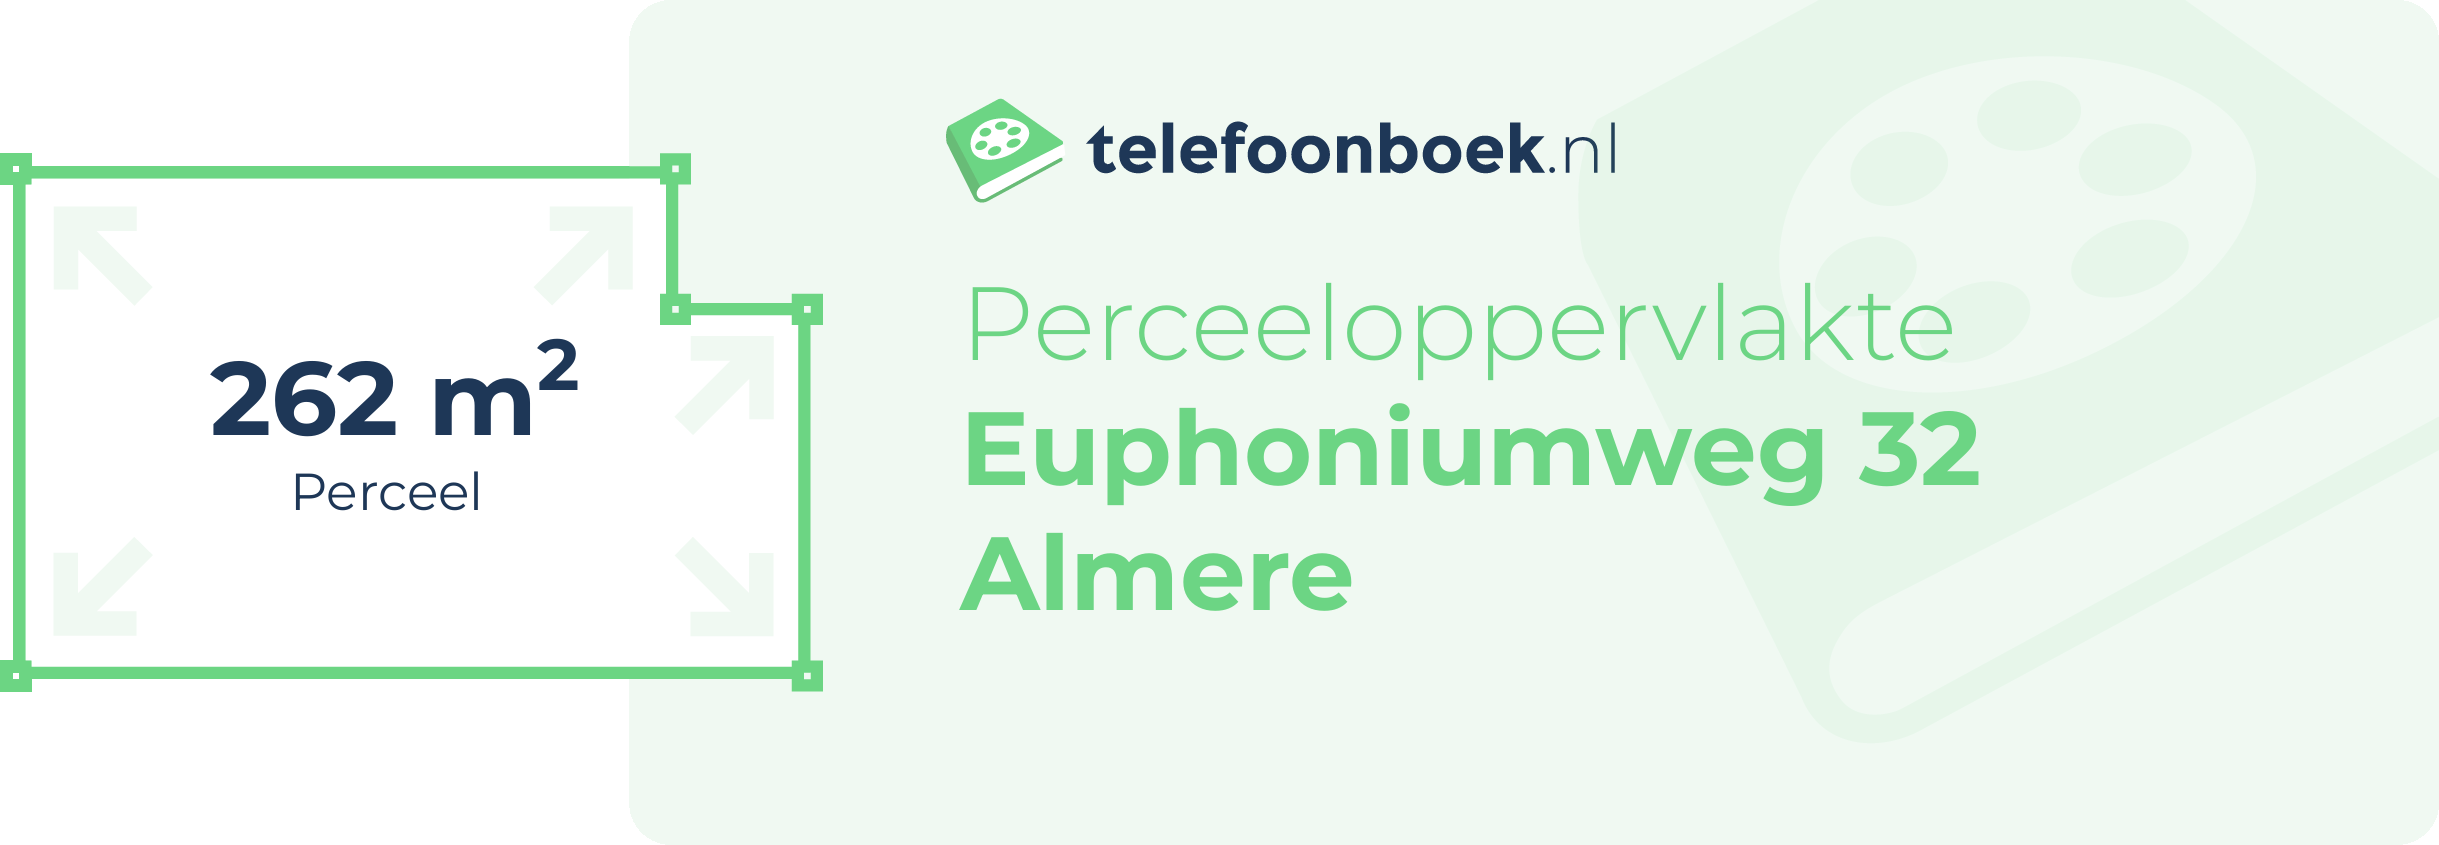 Perceeloppervlakte Euphoniumweg 32 Almere